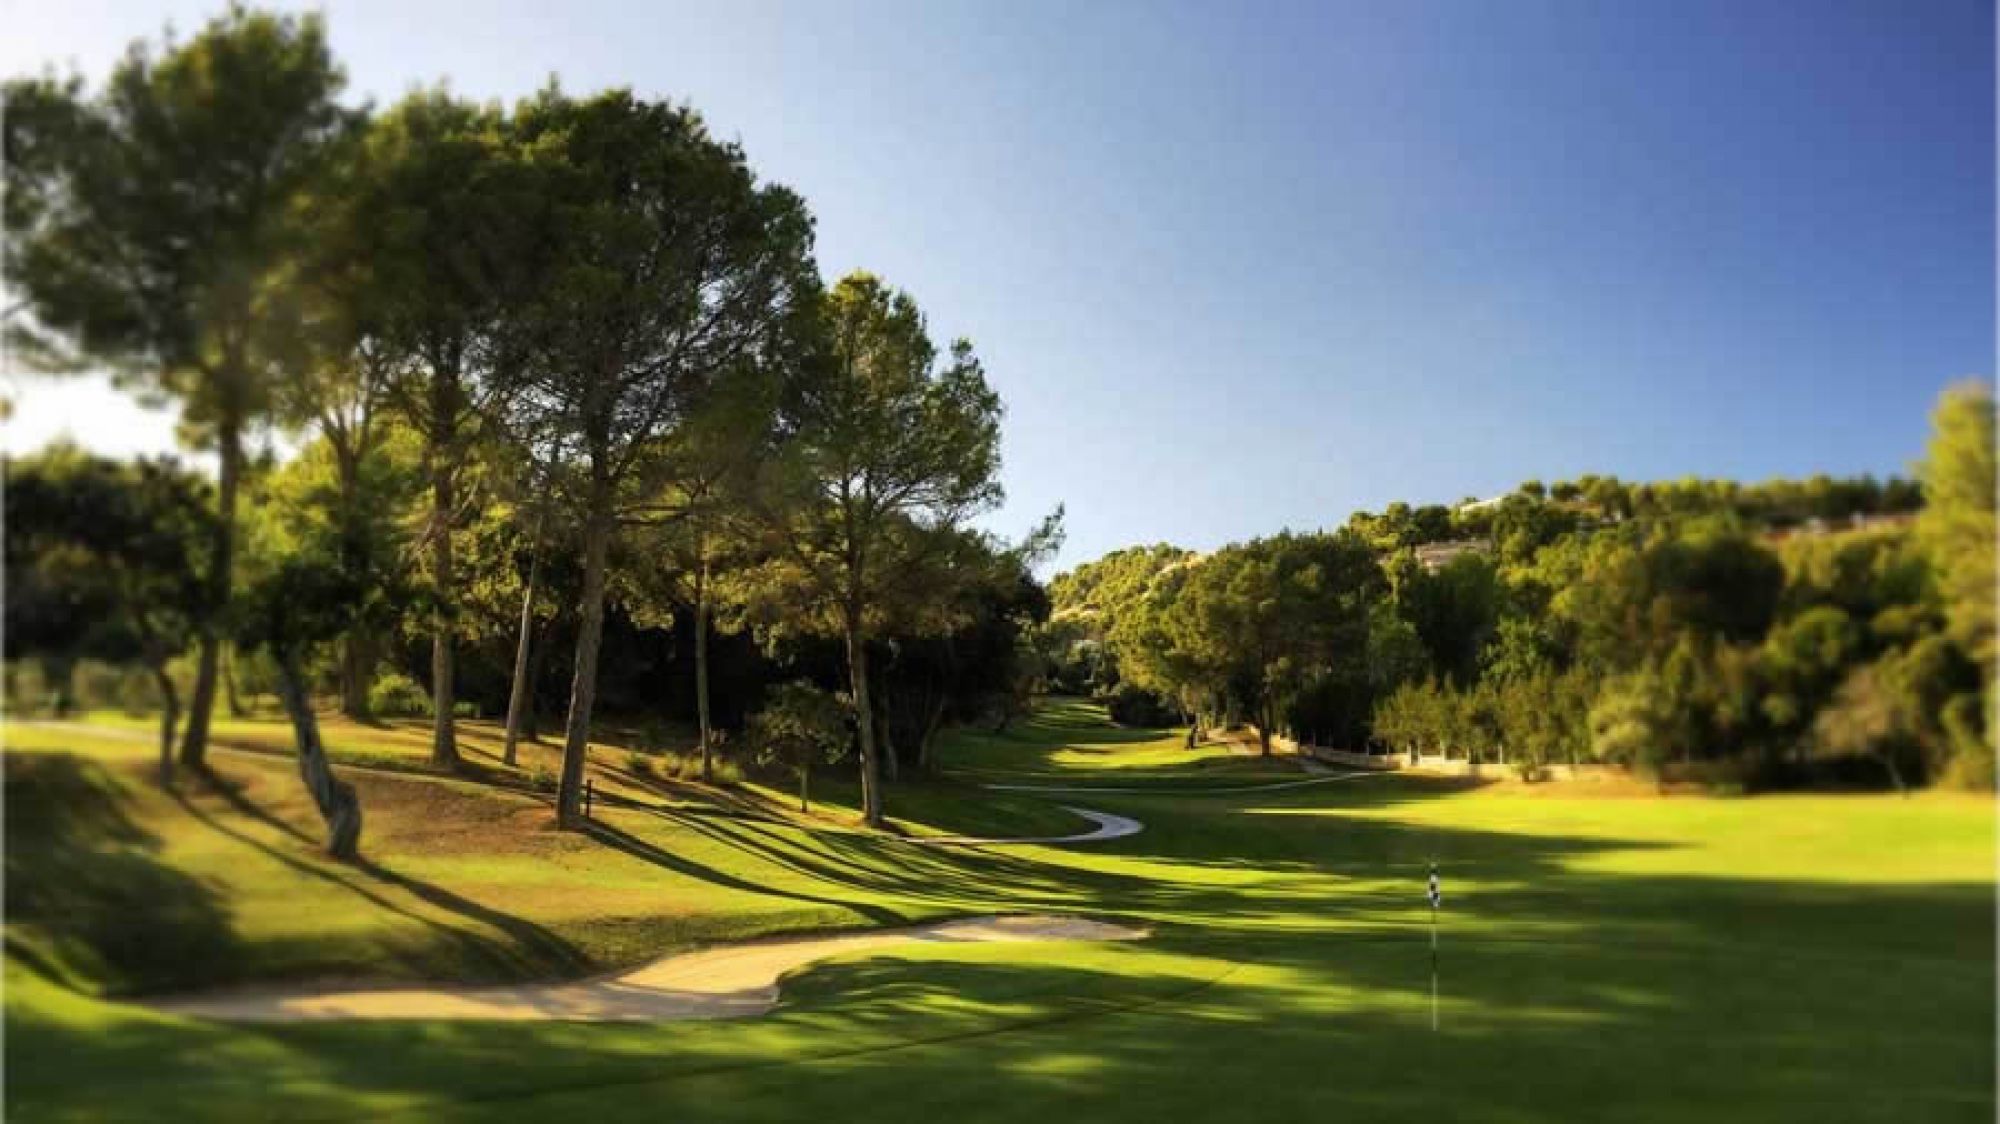 Son Vida Golf Course - Arabella Golf features among the best golf course within Mallorca